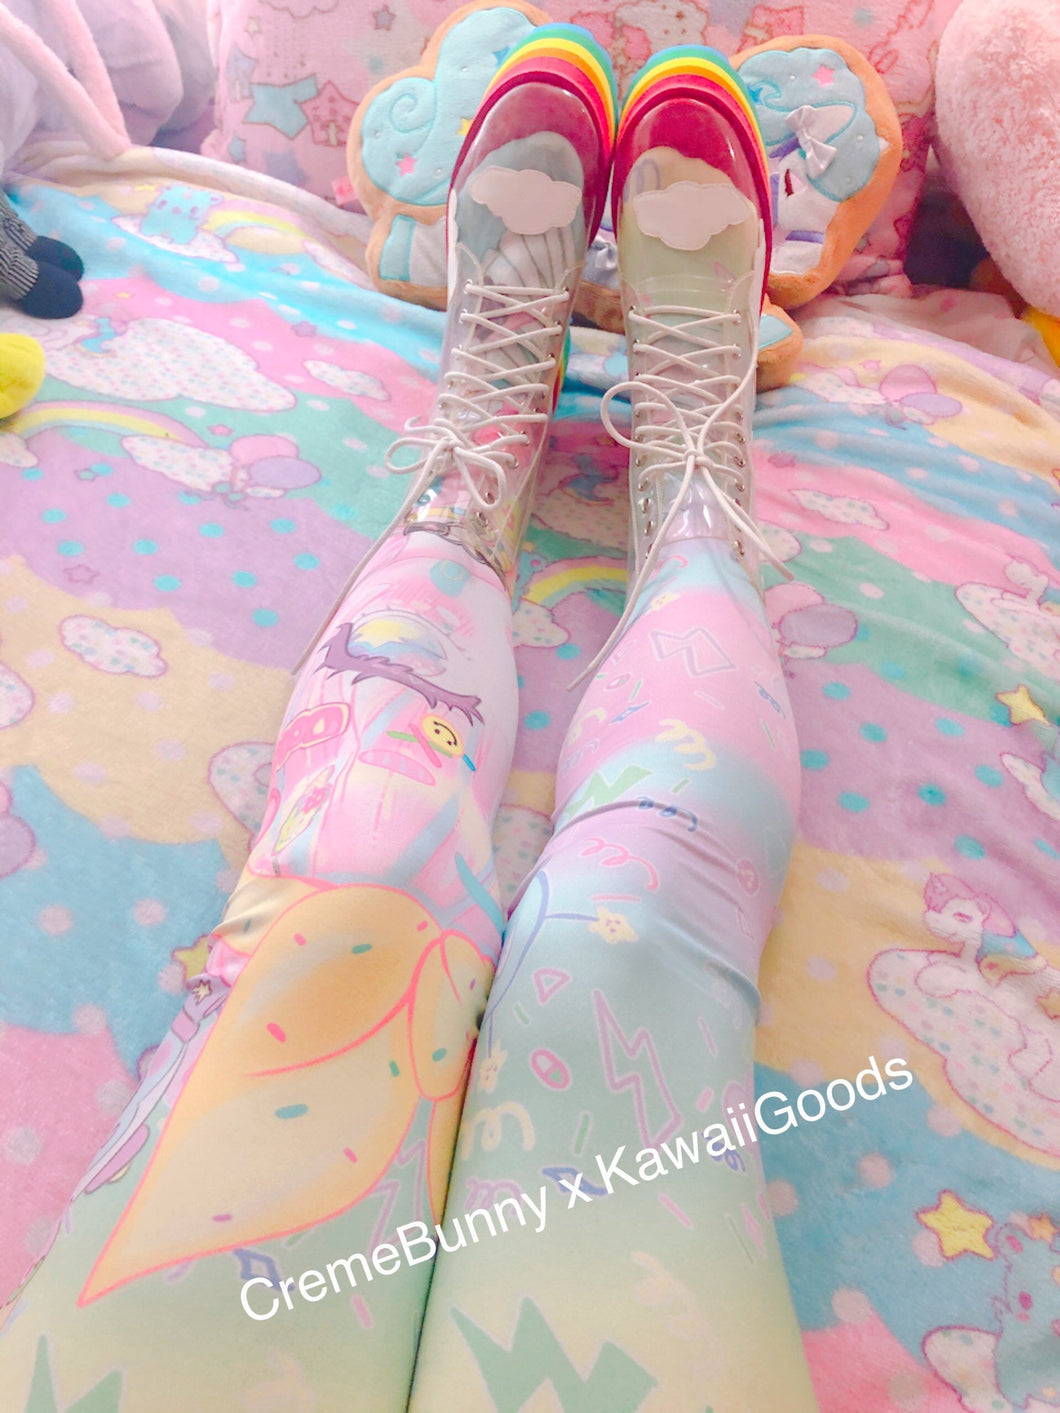 Creme Bunny x Kawaii Goods Decora Girl Party Tights and Leggings (Made